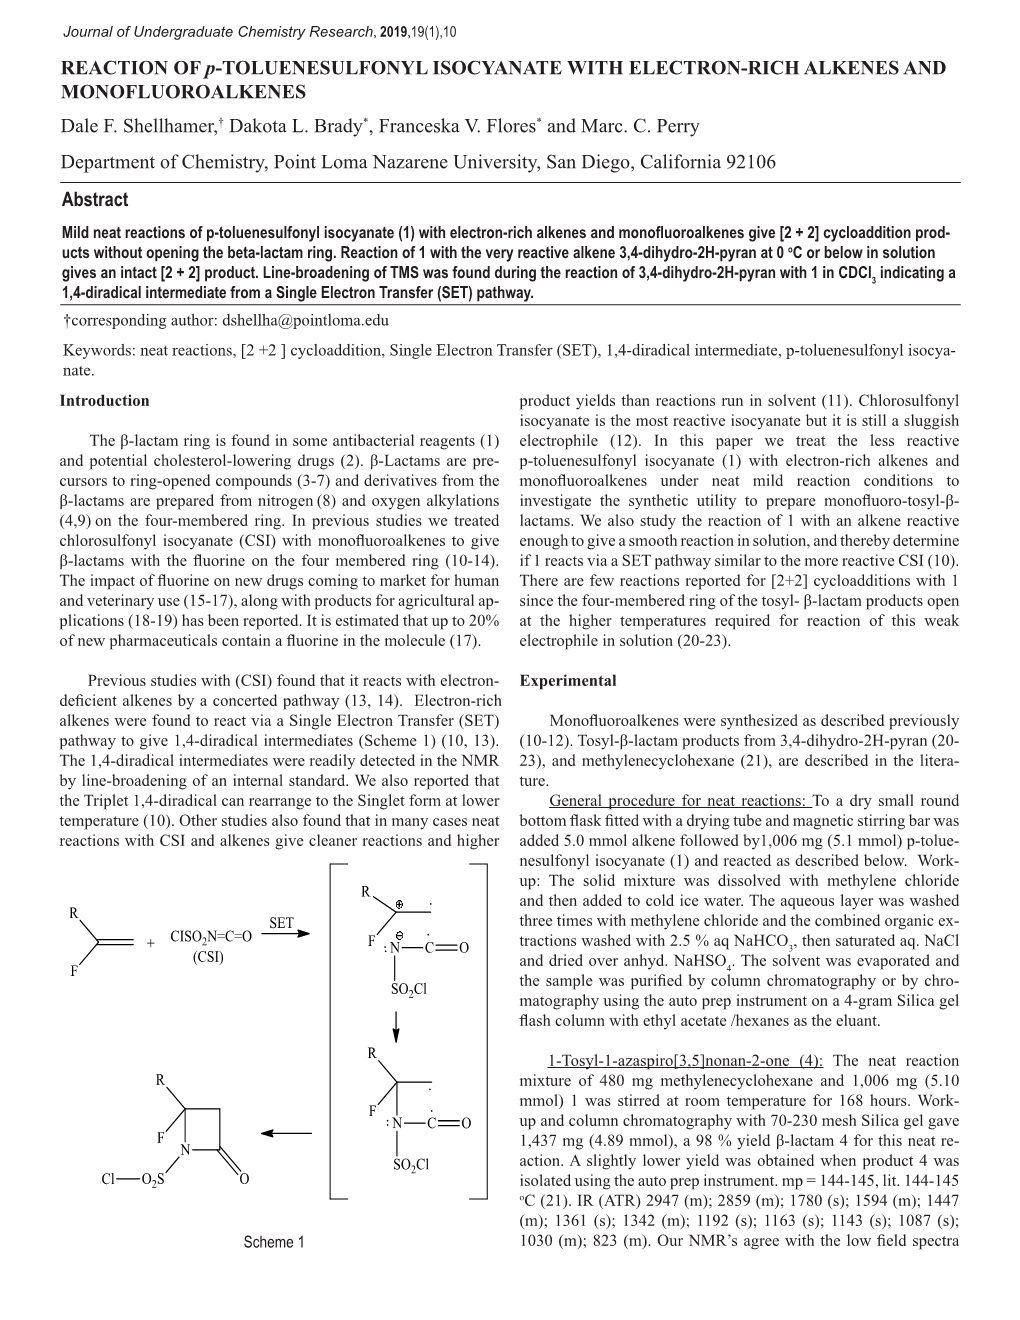 REACTION of P-TOLUENESULFONYL ISOCYANATE with ELECTRON-RICH ALKENES and MONOFLUOROALKENES Dale F